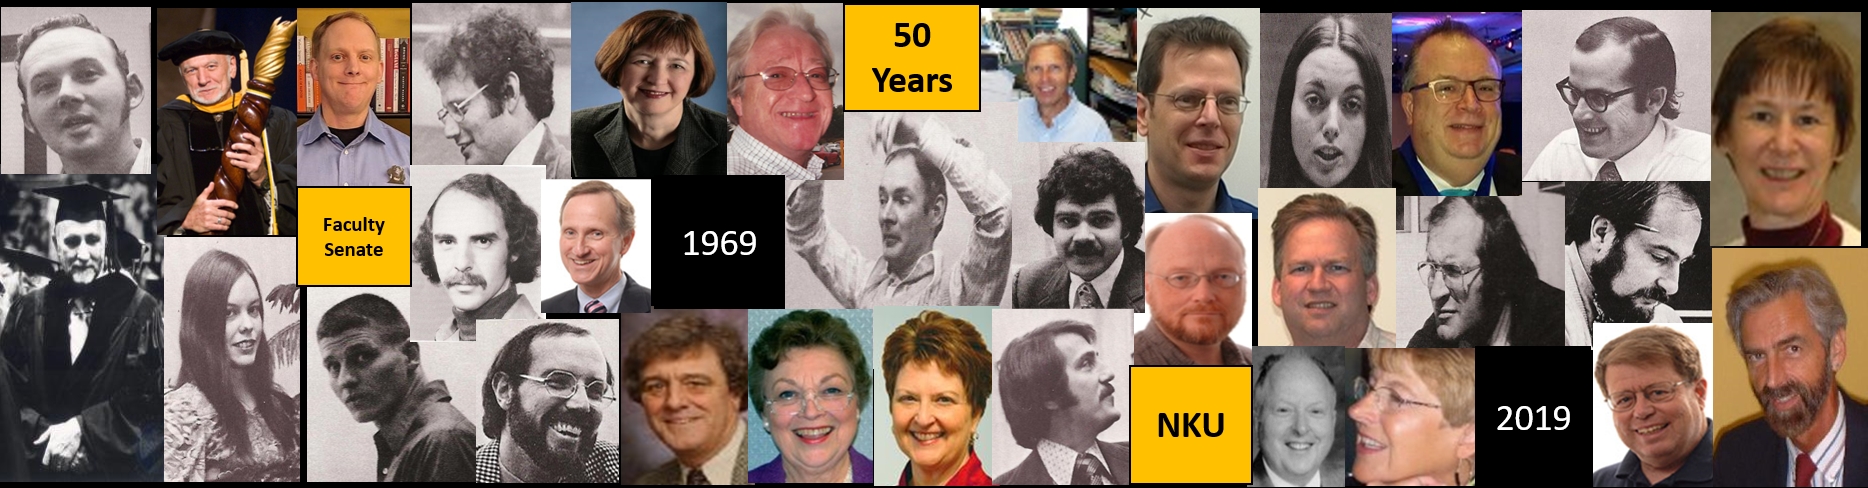 50 Years Faculty Senate 